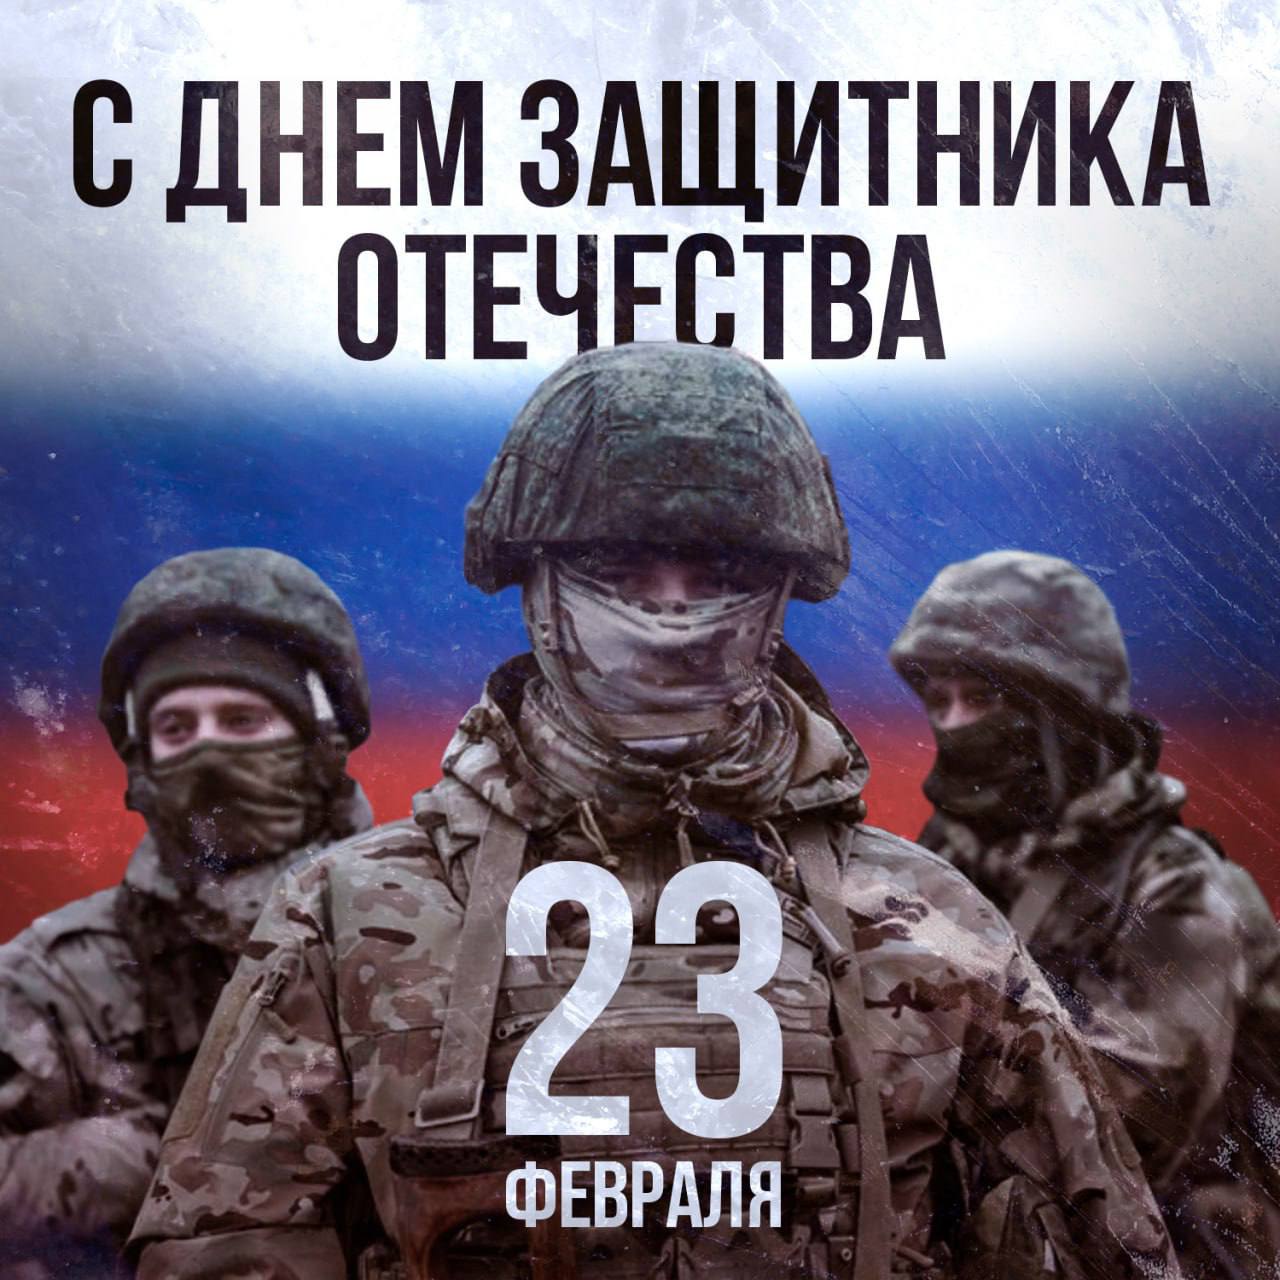 Празднуют ли 23 февраля на украине